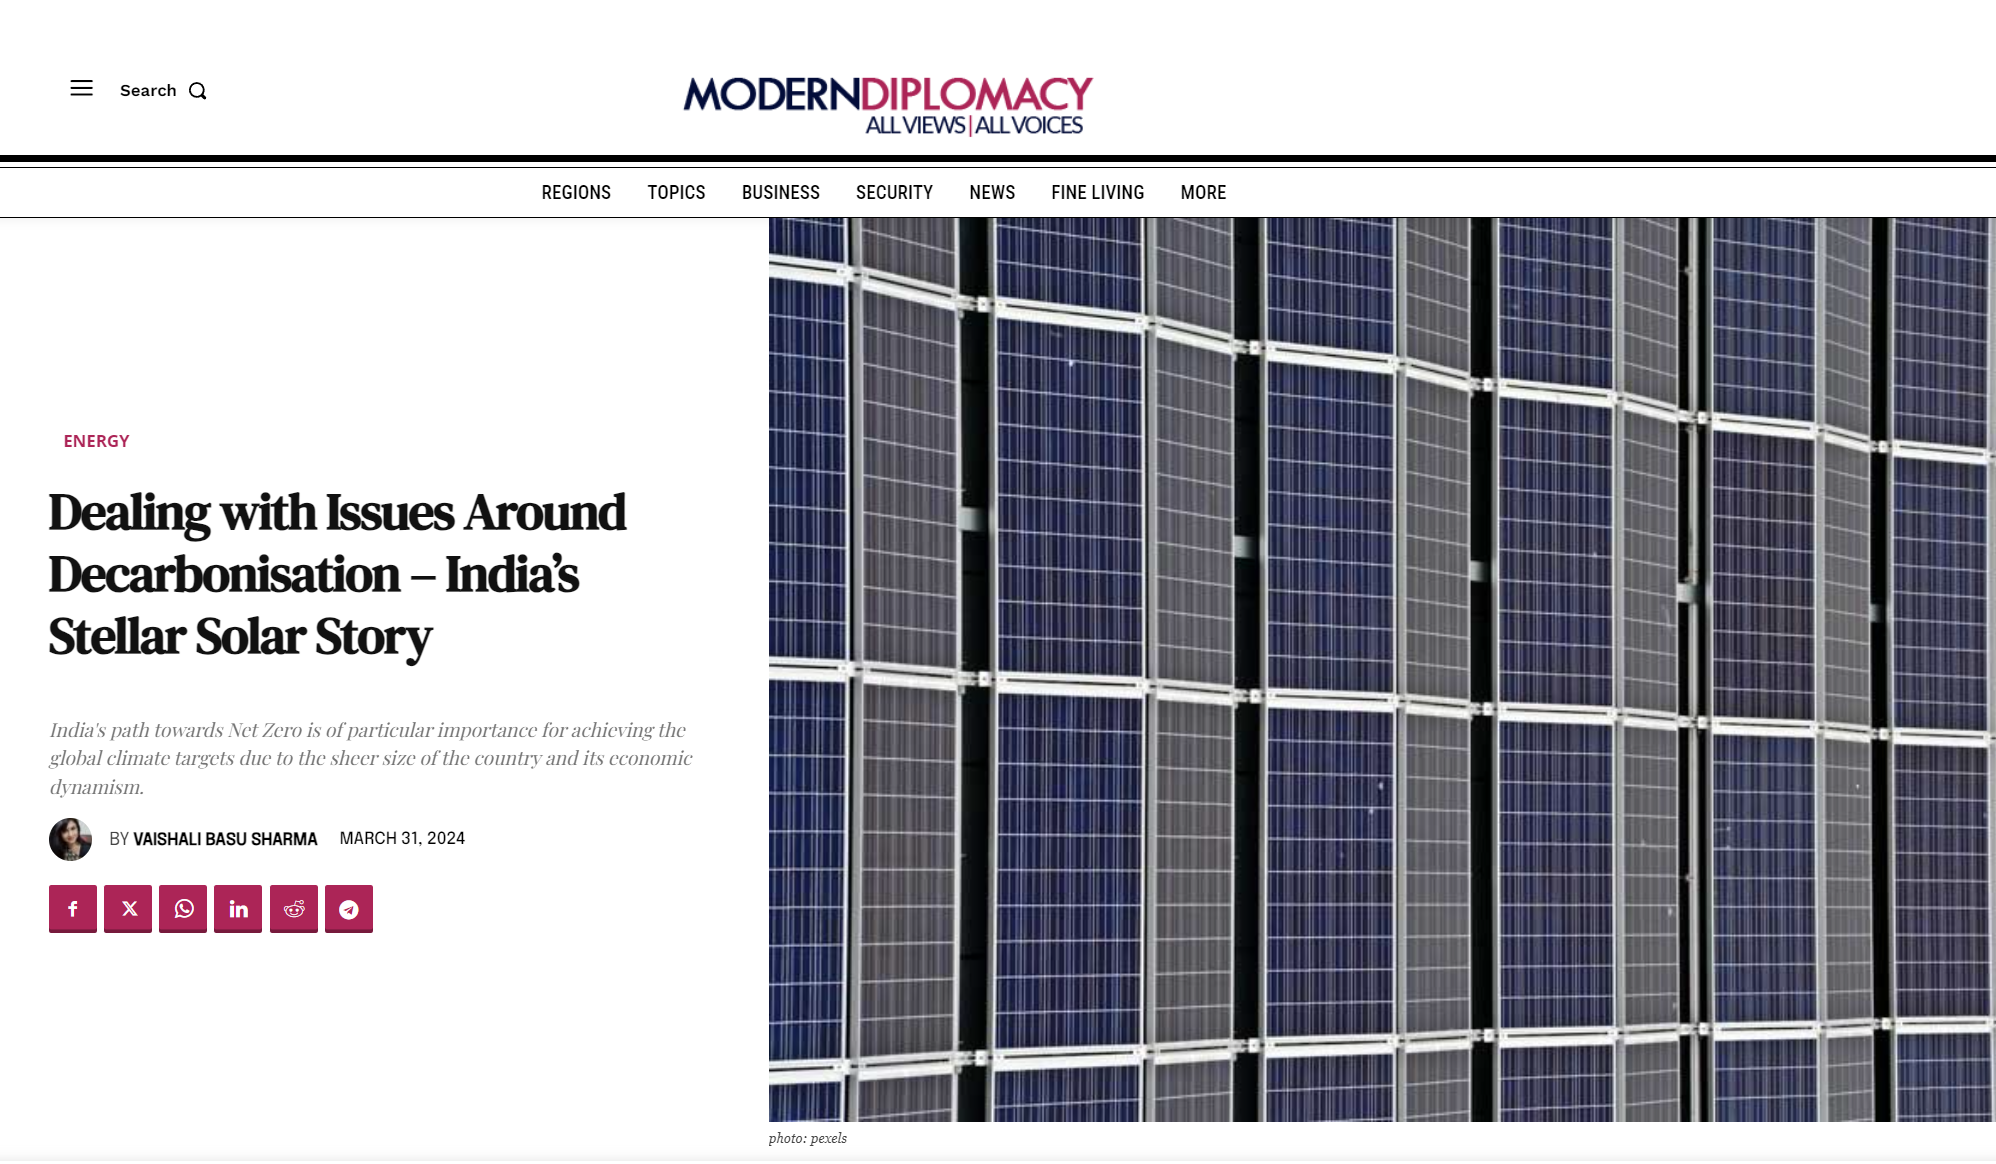 Modern Diplomacy: Η ηλιακή ιστορία της Ινδίας – Αντιμετώπιση ζητημάτων γύρω από την απαλλαγή από τις εκπομπές άνθρακα